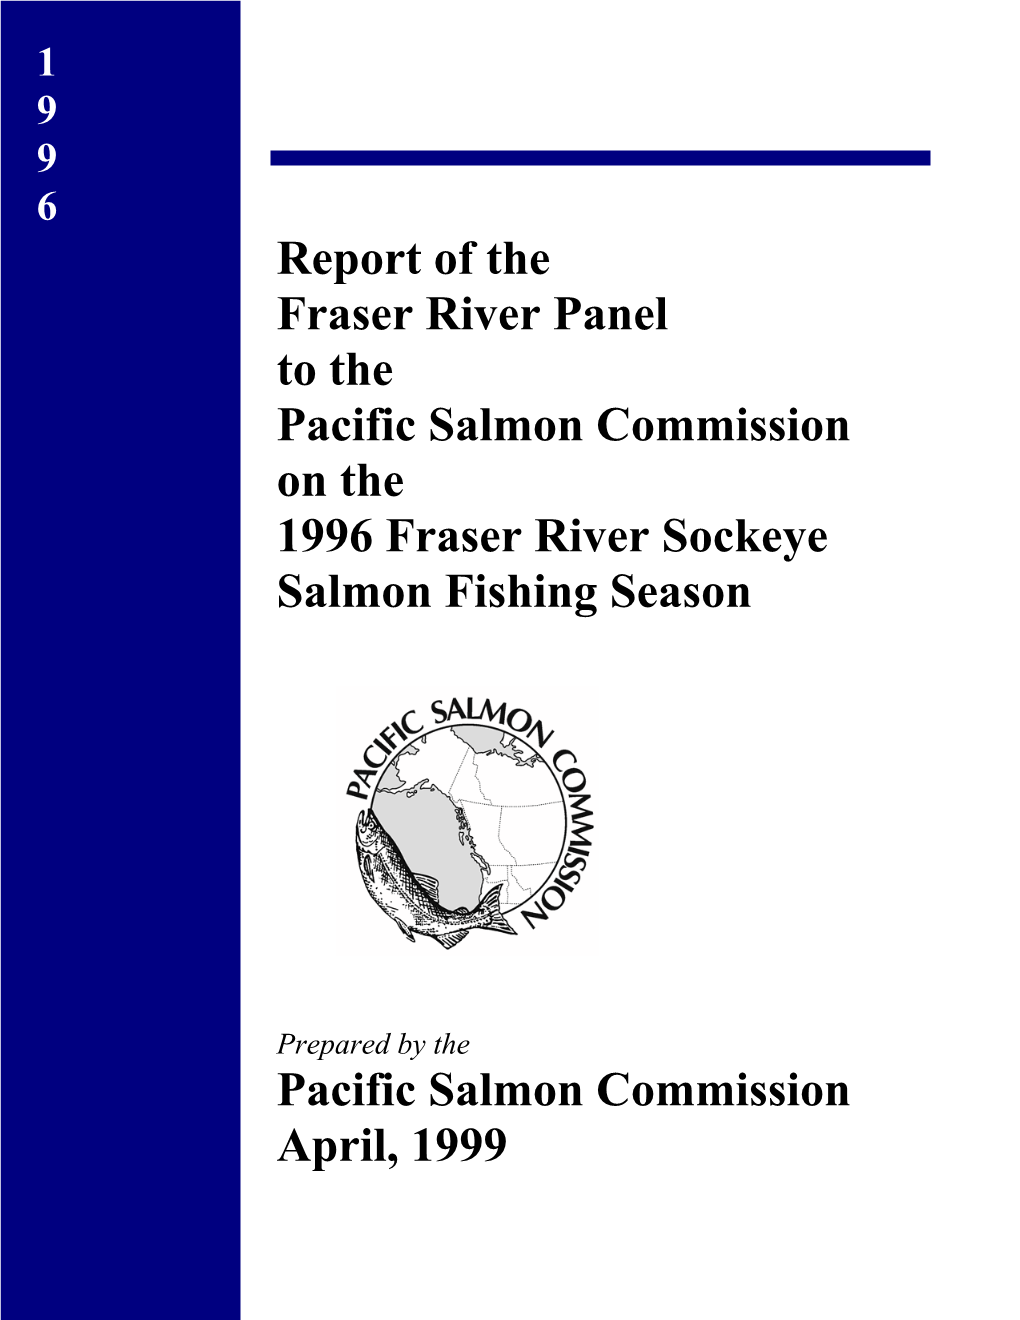 1996 FRP Annual Report